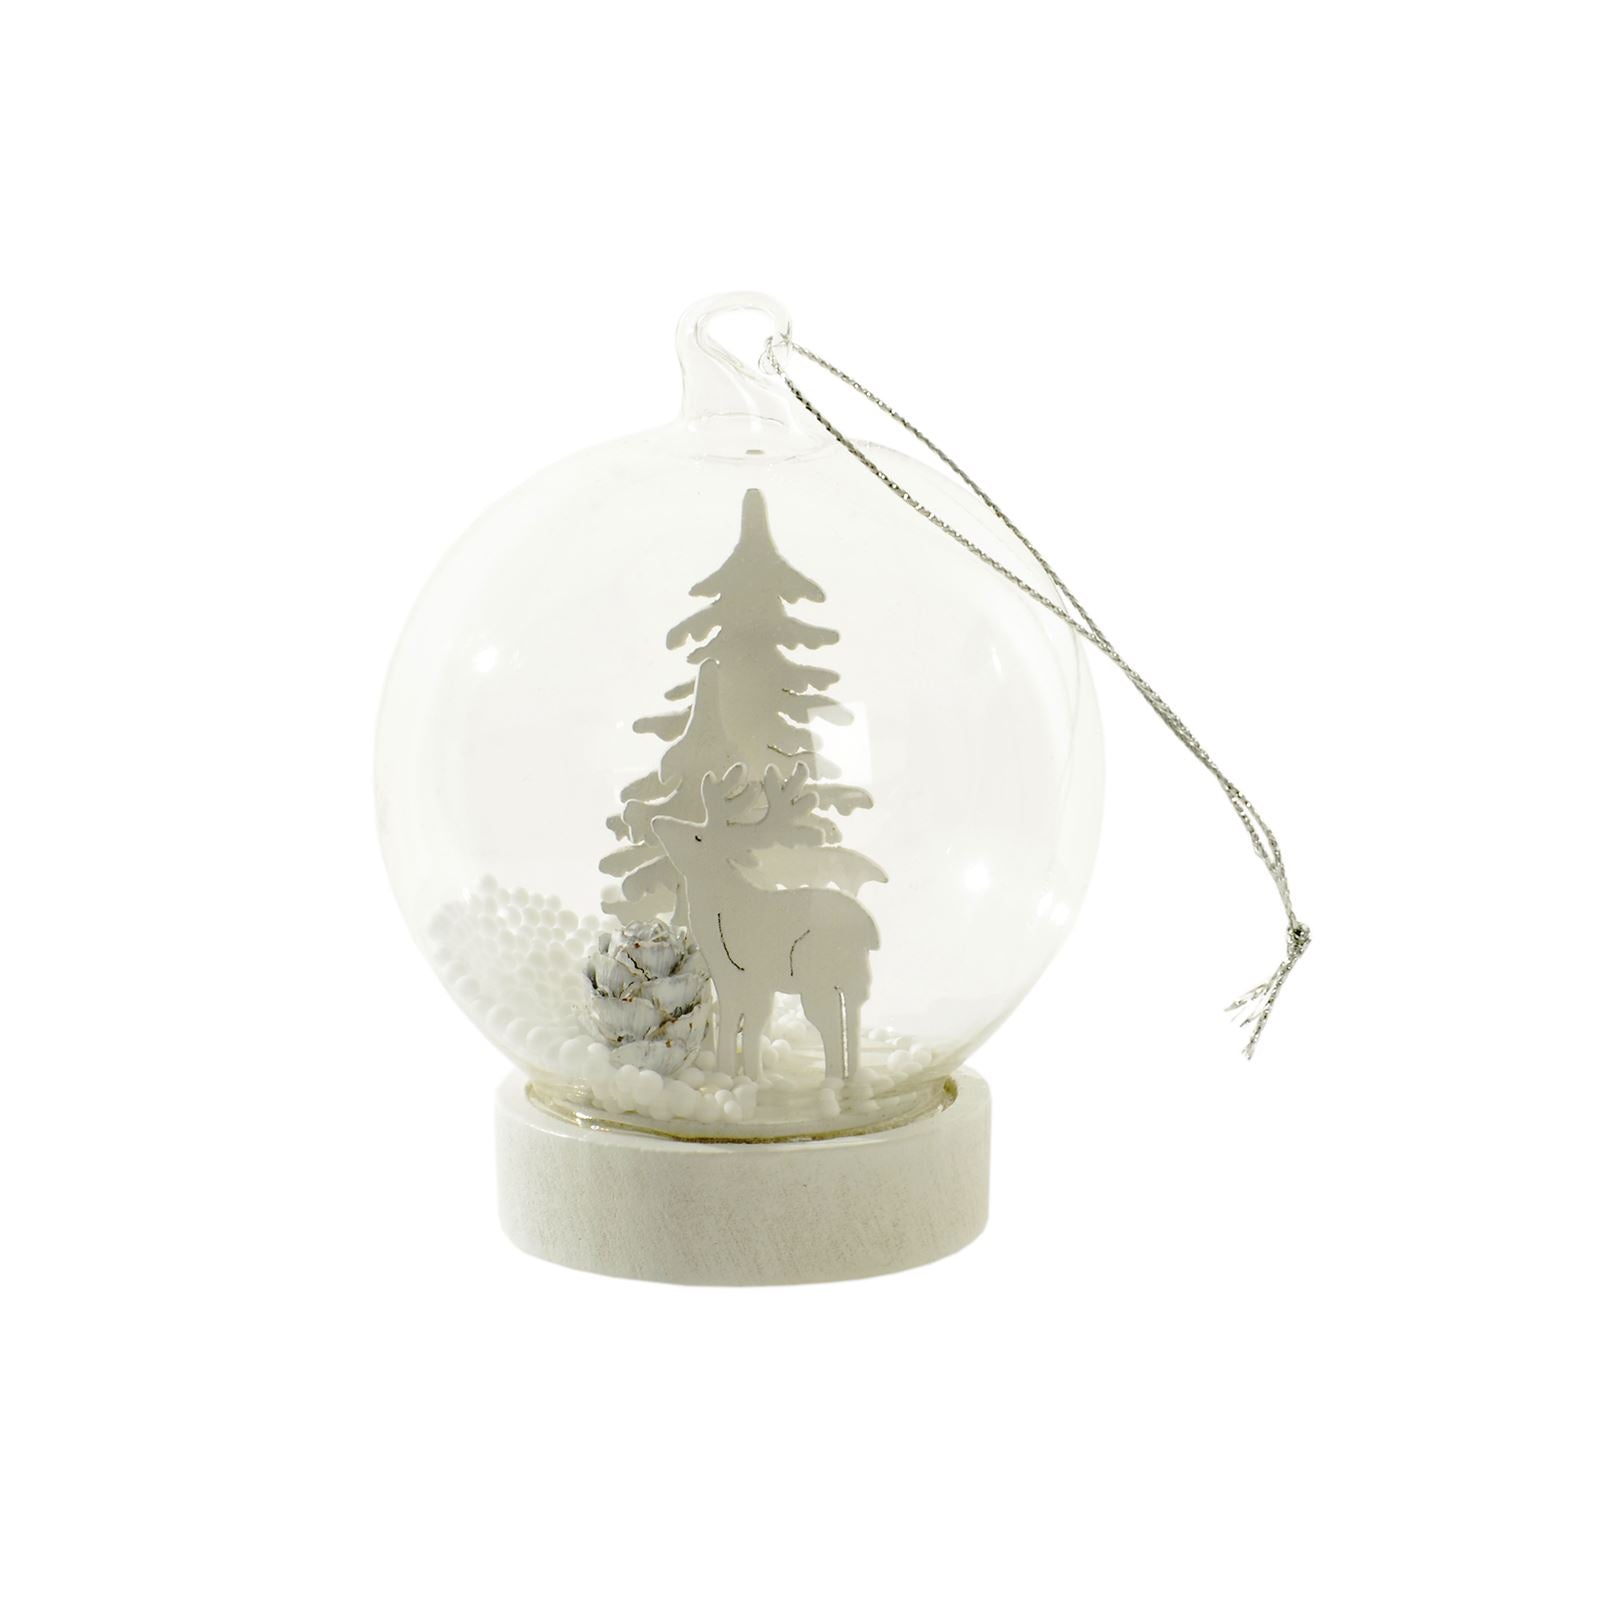 Mr Crimbo Glass Globe Light Up Christmas Tree Baubles - MrCrimbo.co.uk -XS5065 - Reindeer/Forest -Baubles